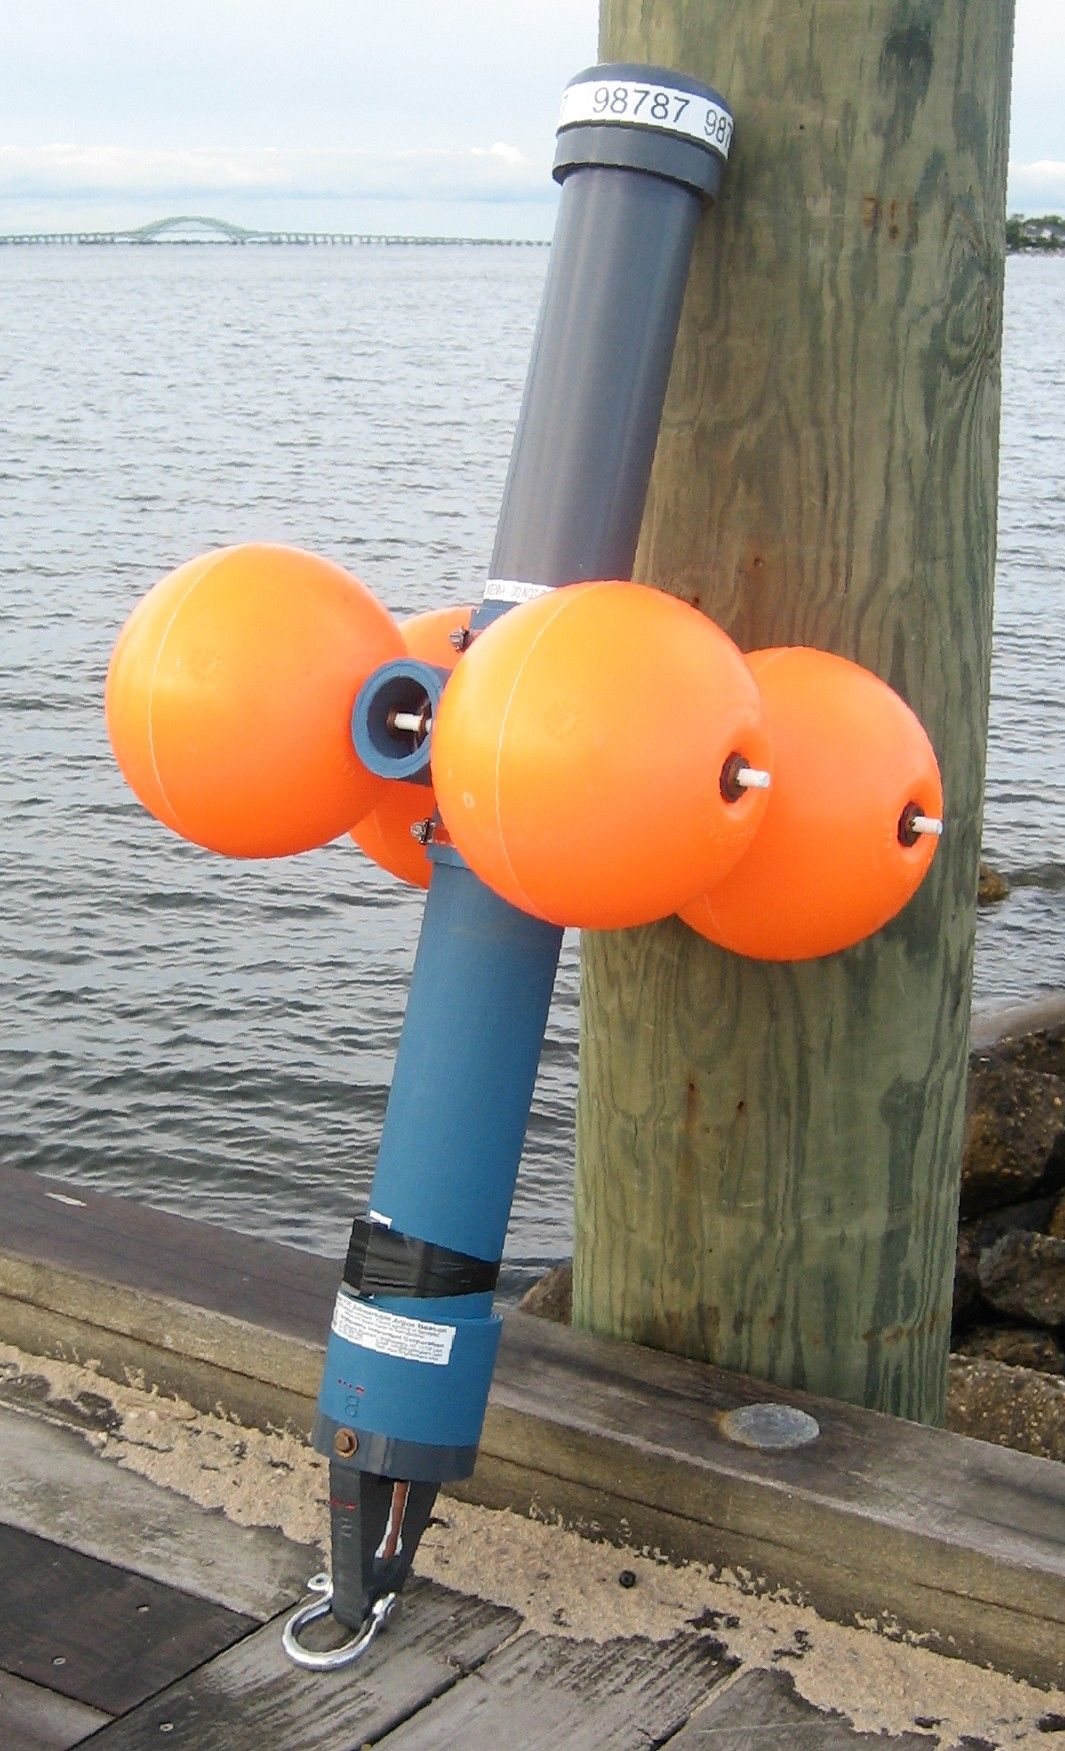 Submersible Argos beacon Model 113c with self-flotation option